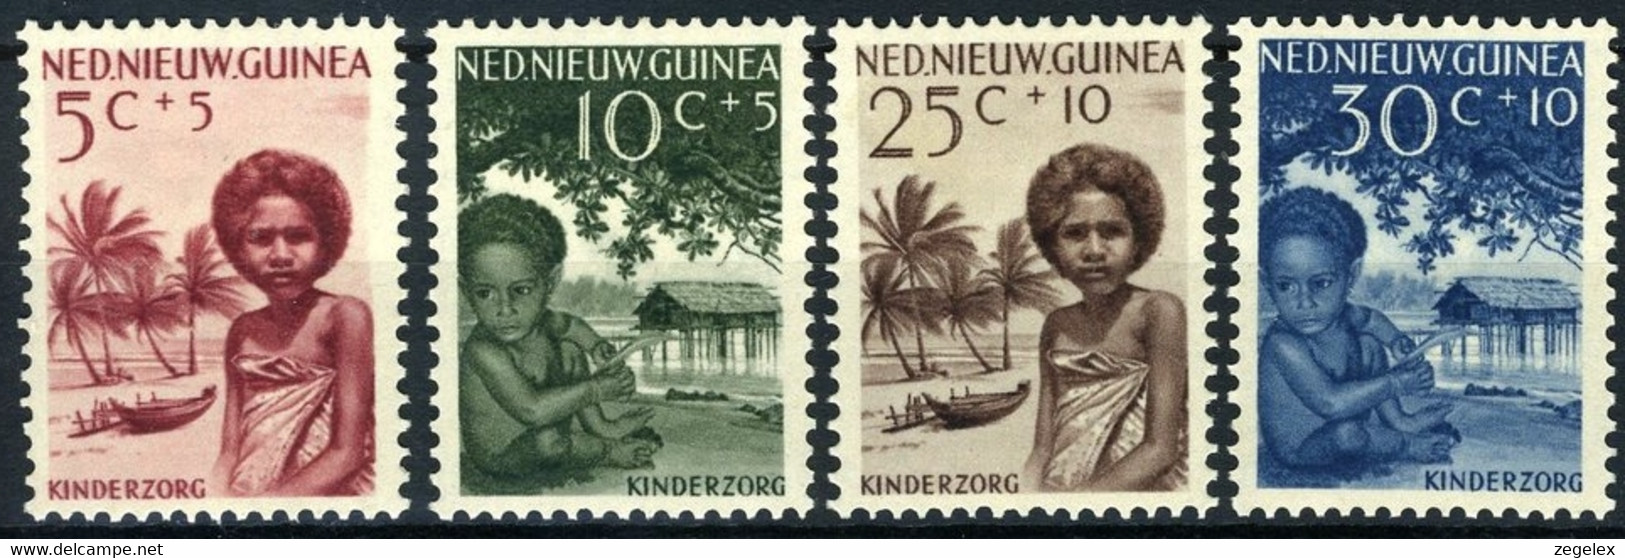 Nederlands Nieuw Guinea 1957, Kind NVPH 45-48 MH*/ongestempeld,hinged - Netherlands New Guinea